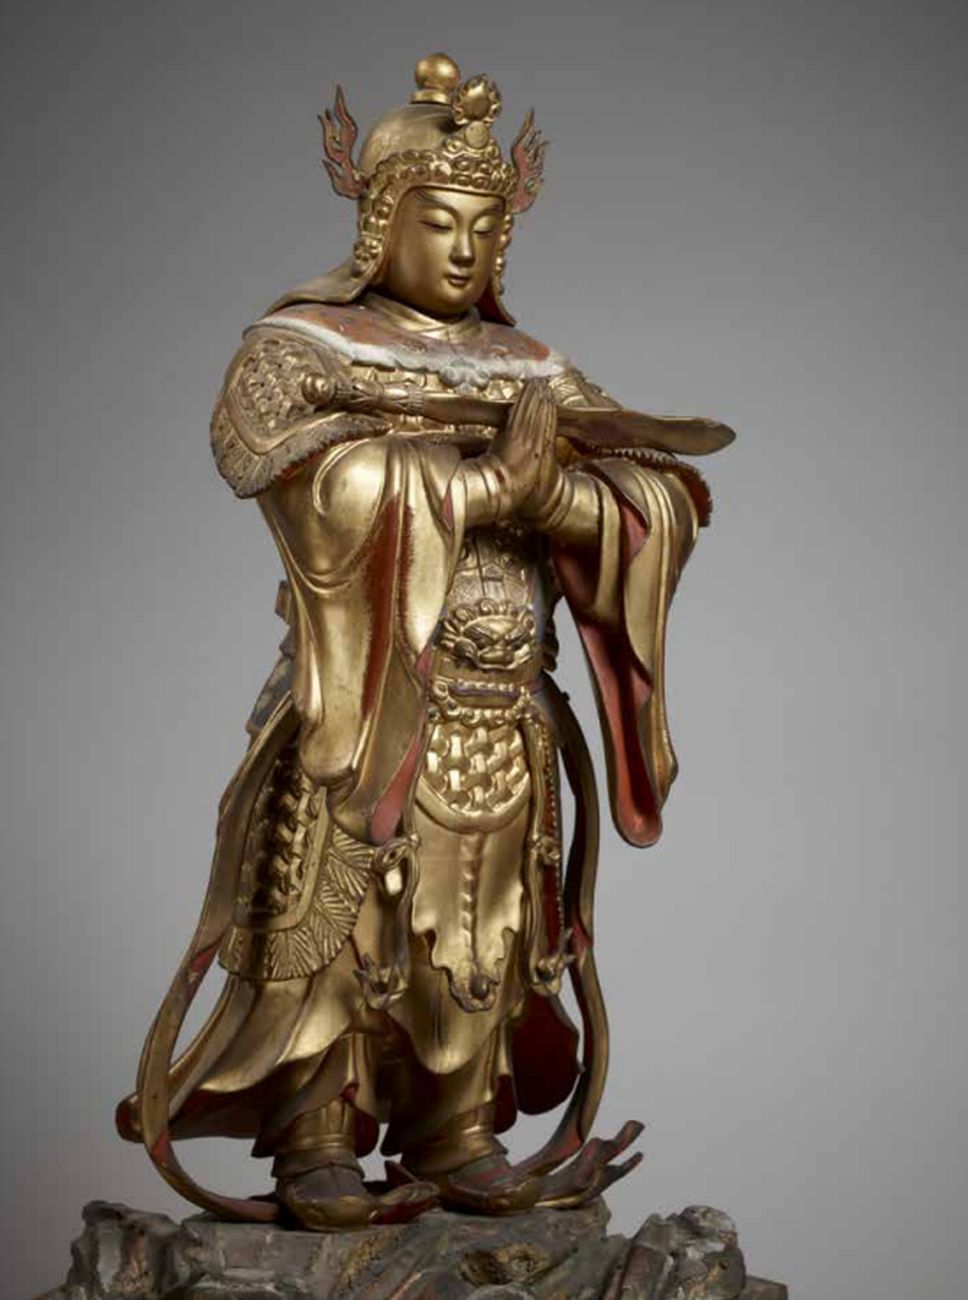 Ida ten (Skanda), XIX secolo, legno laccato e dorato, Musée national des arts asiatiques Guimet, Paris © RMN Grand Palais (MNAAG, Paris) – Thierry Ollivier